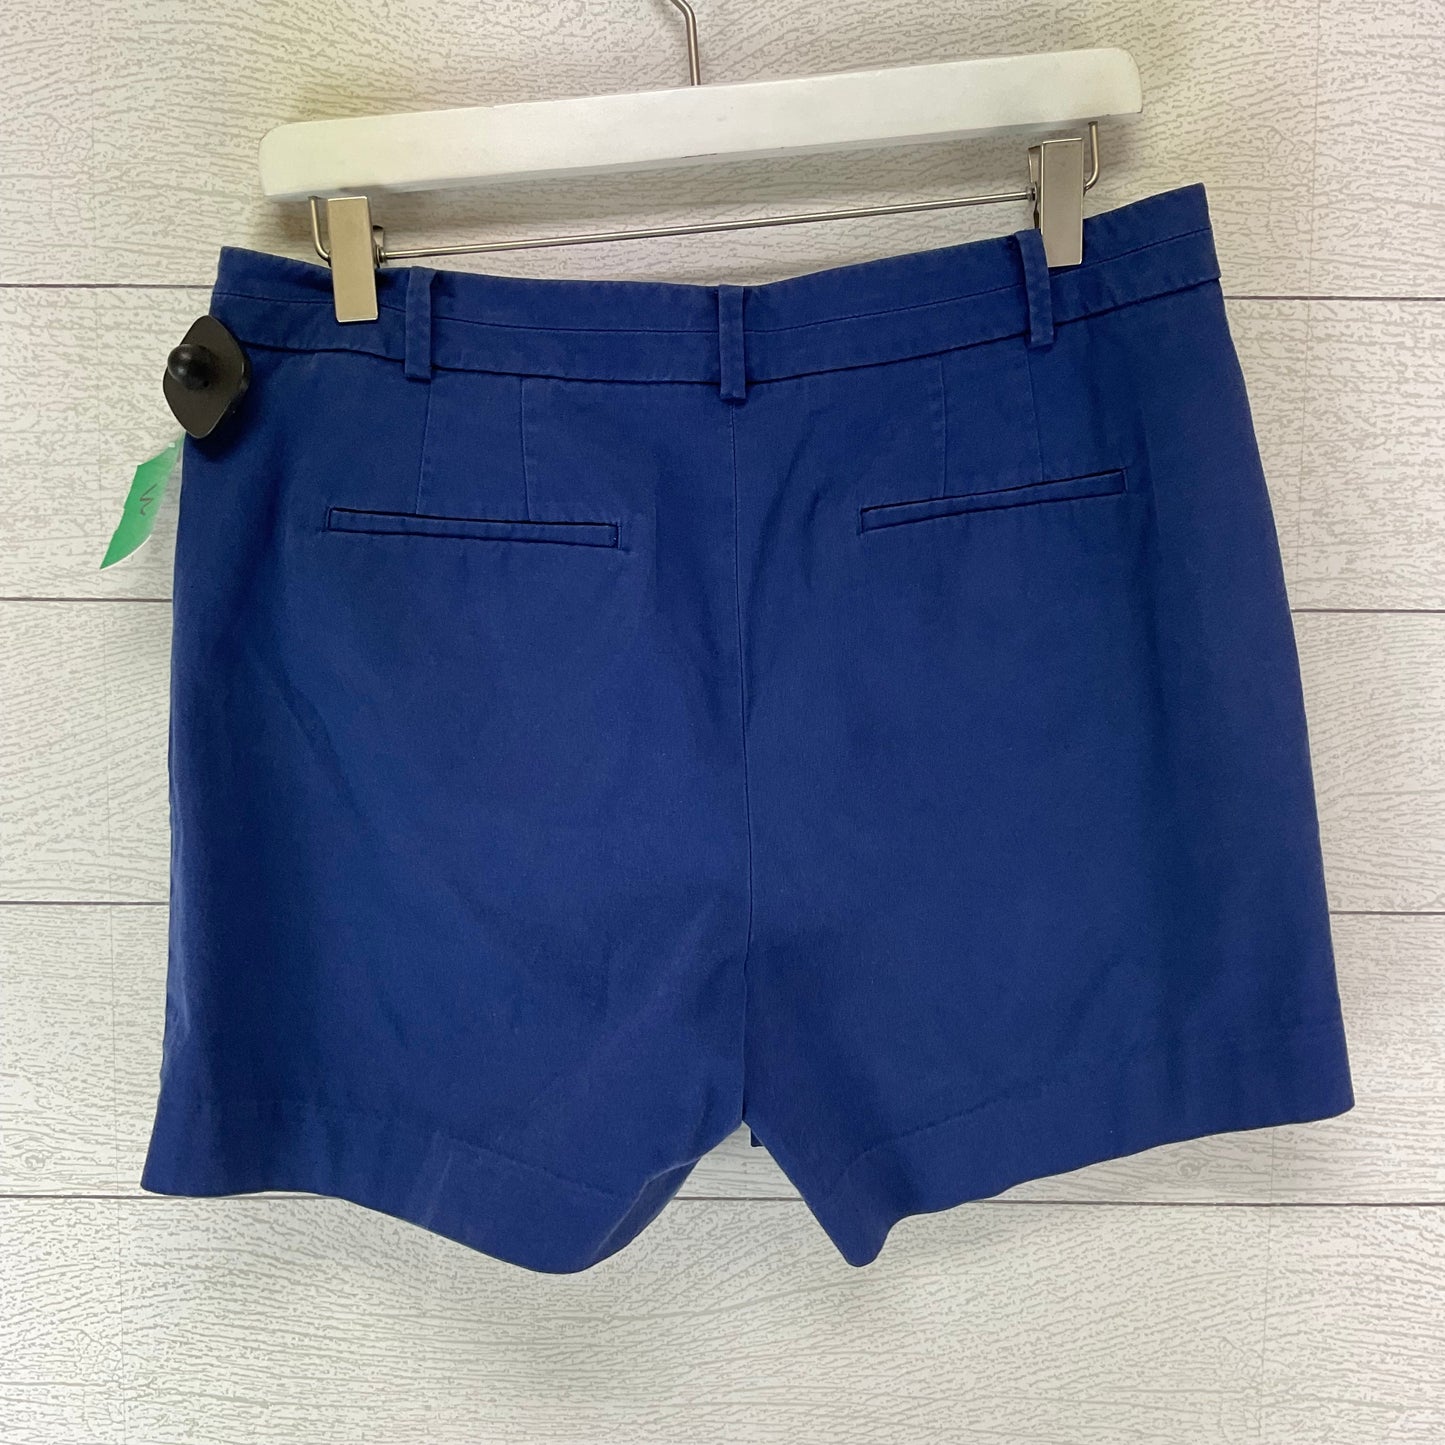 Blue Shorts Talbots, Size 8